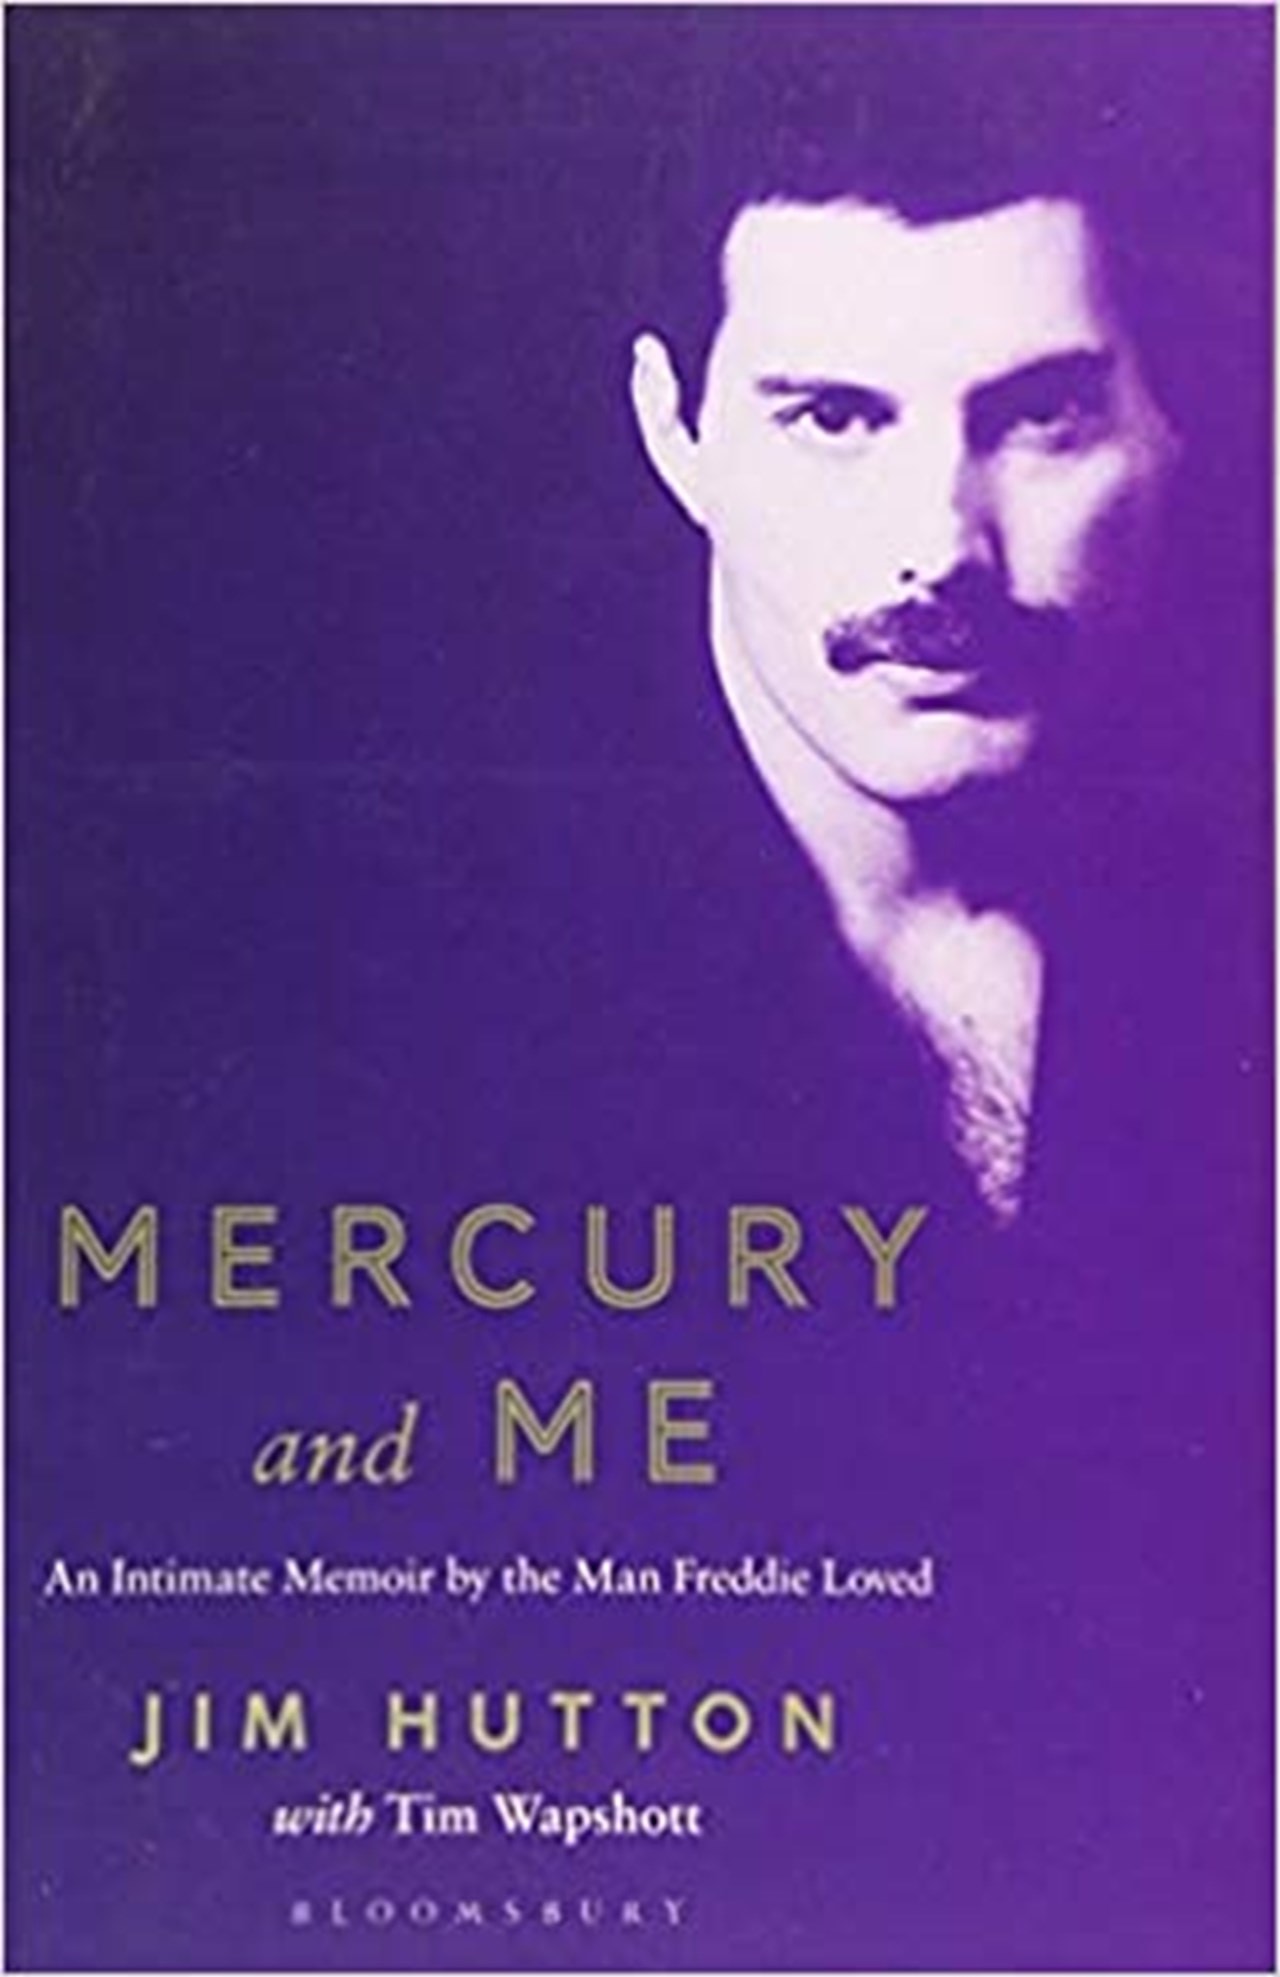 Mercury & Me | Books | Free shipping over £20 | HMV Store